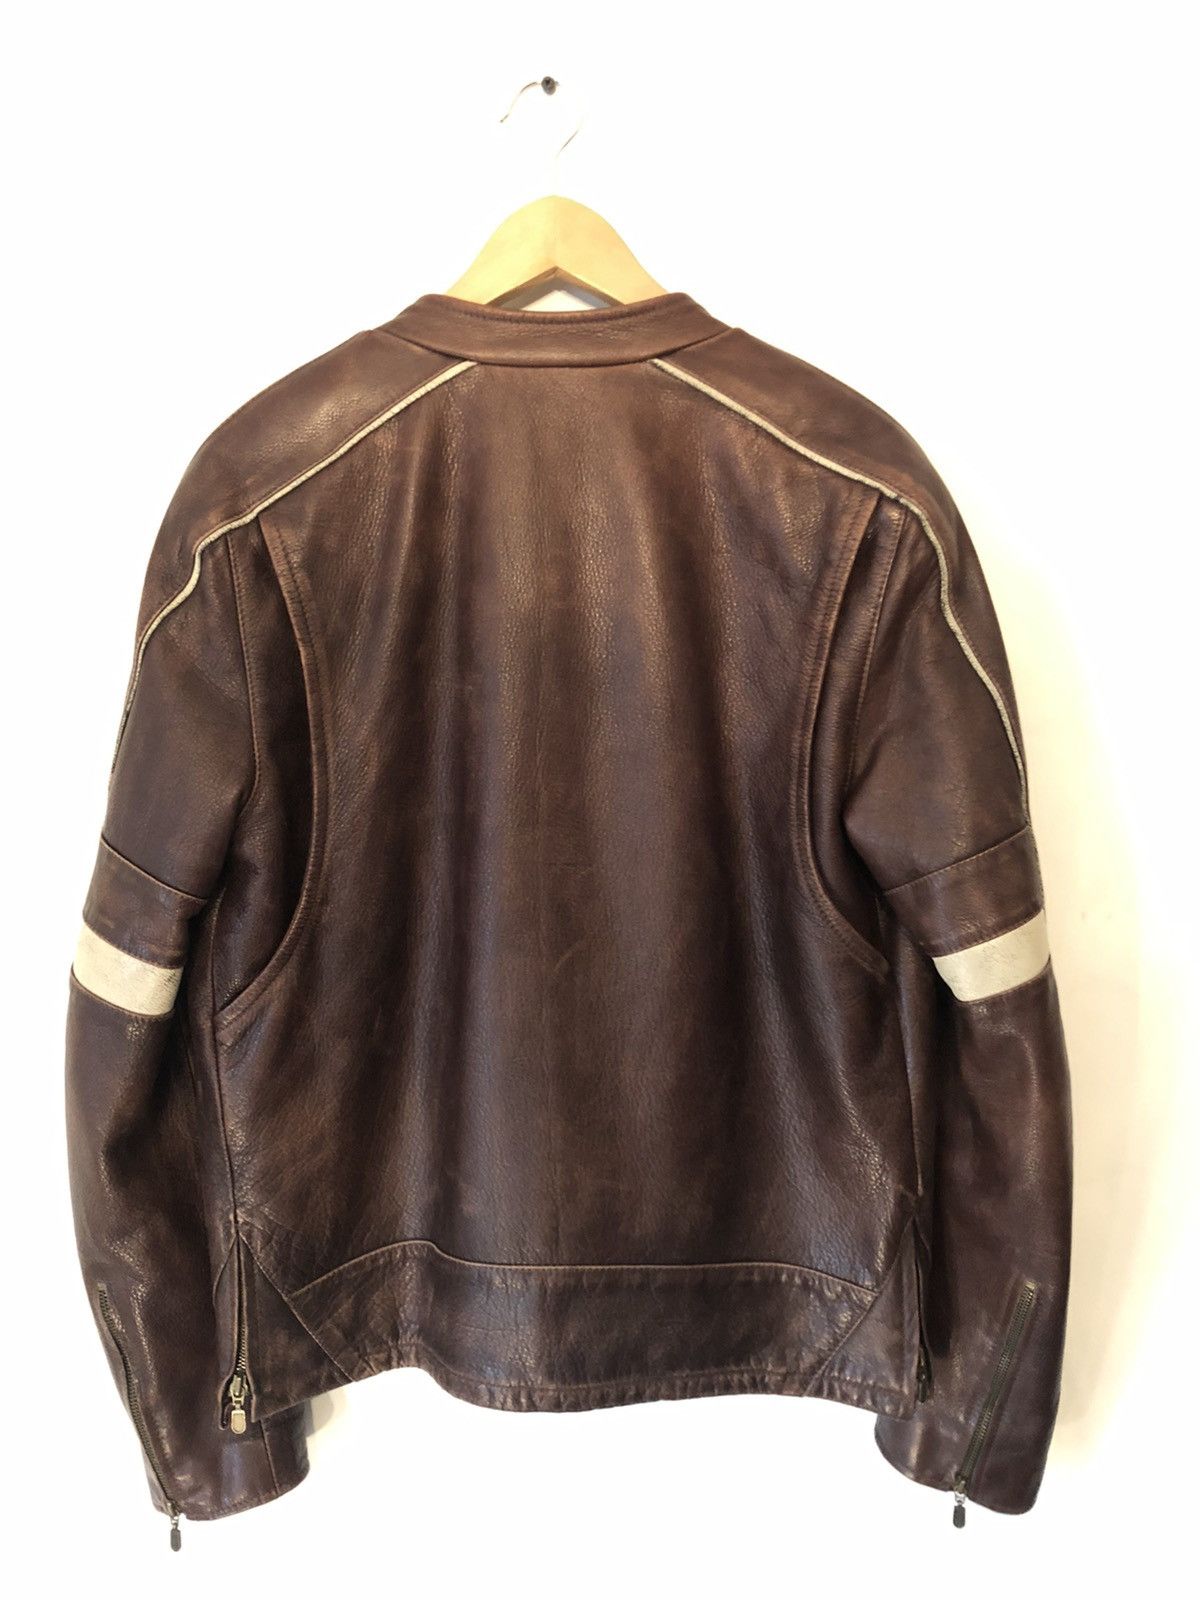 Belstaff Belstaff leather jacket limited edition “War of the worlds” Size US XXL / EU 58 / 5 - 7 Thumbnail